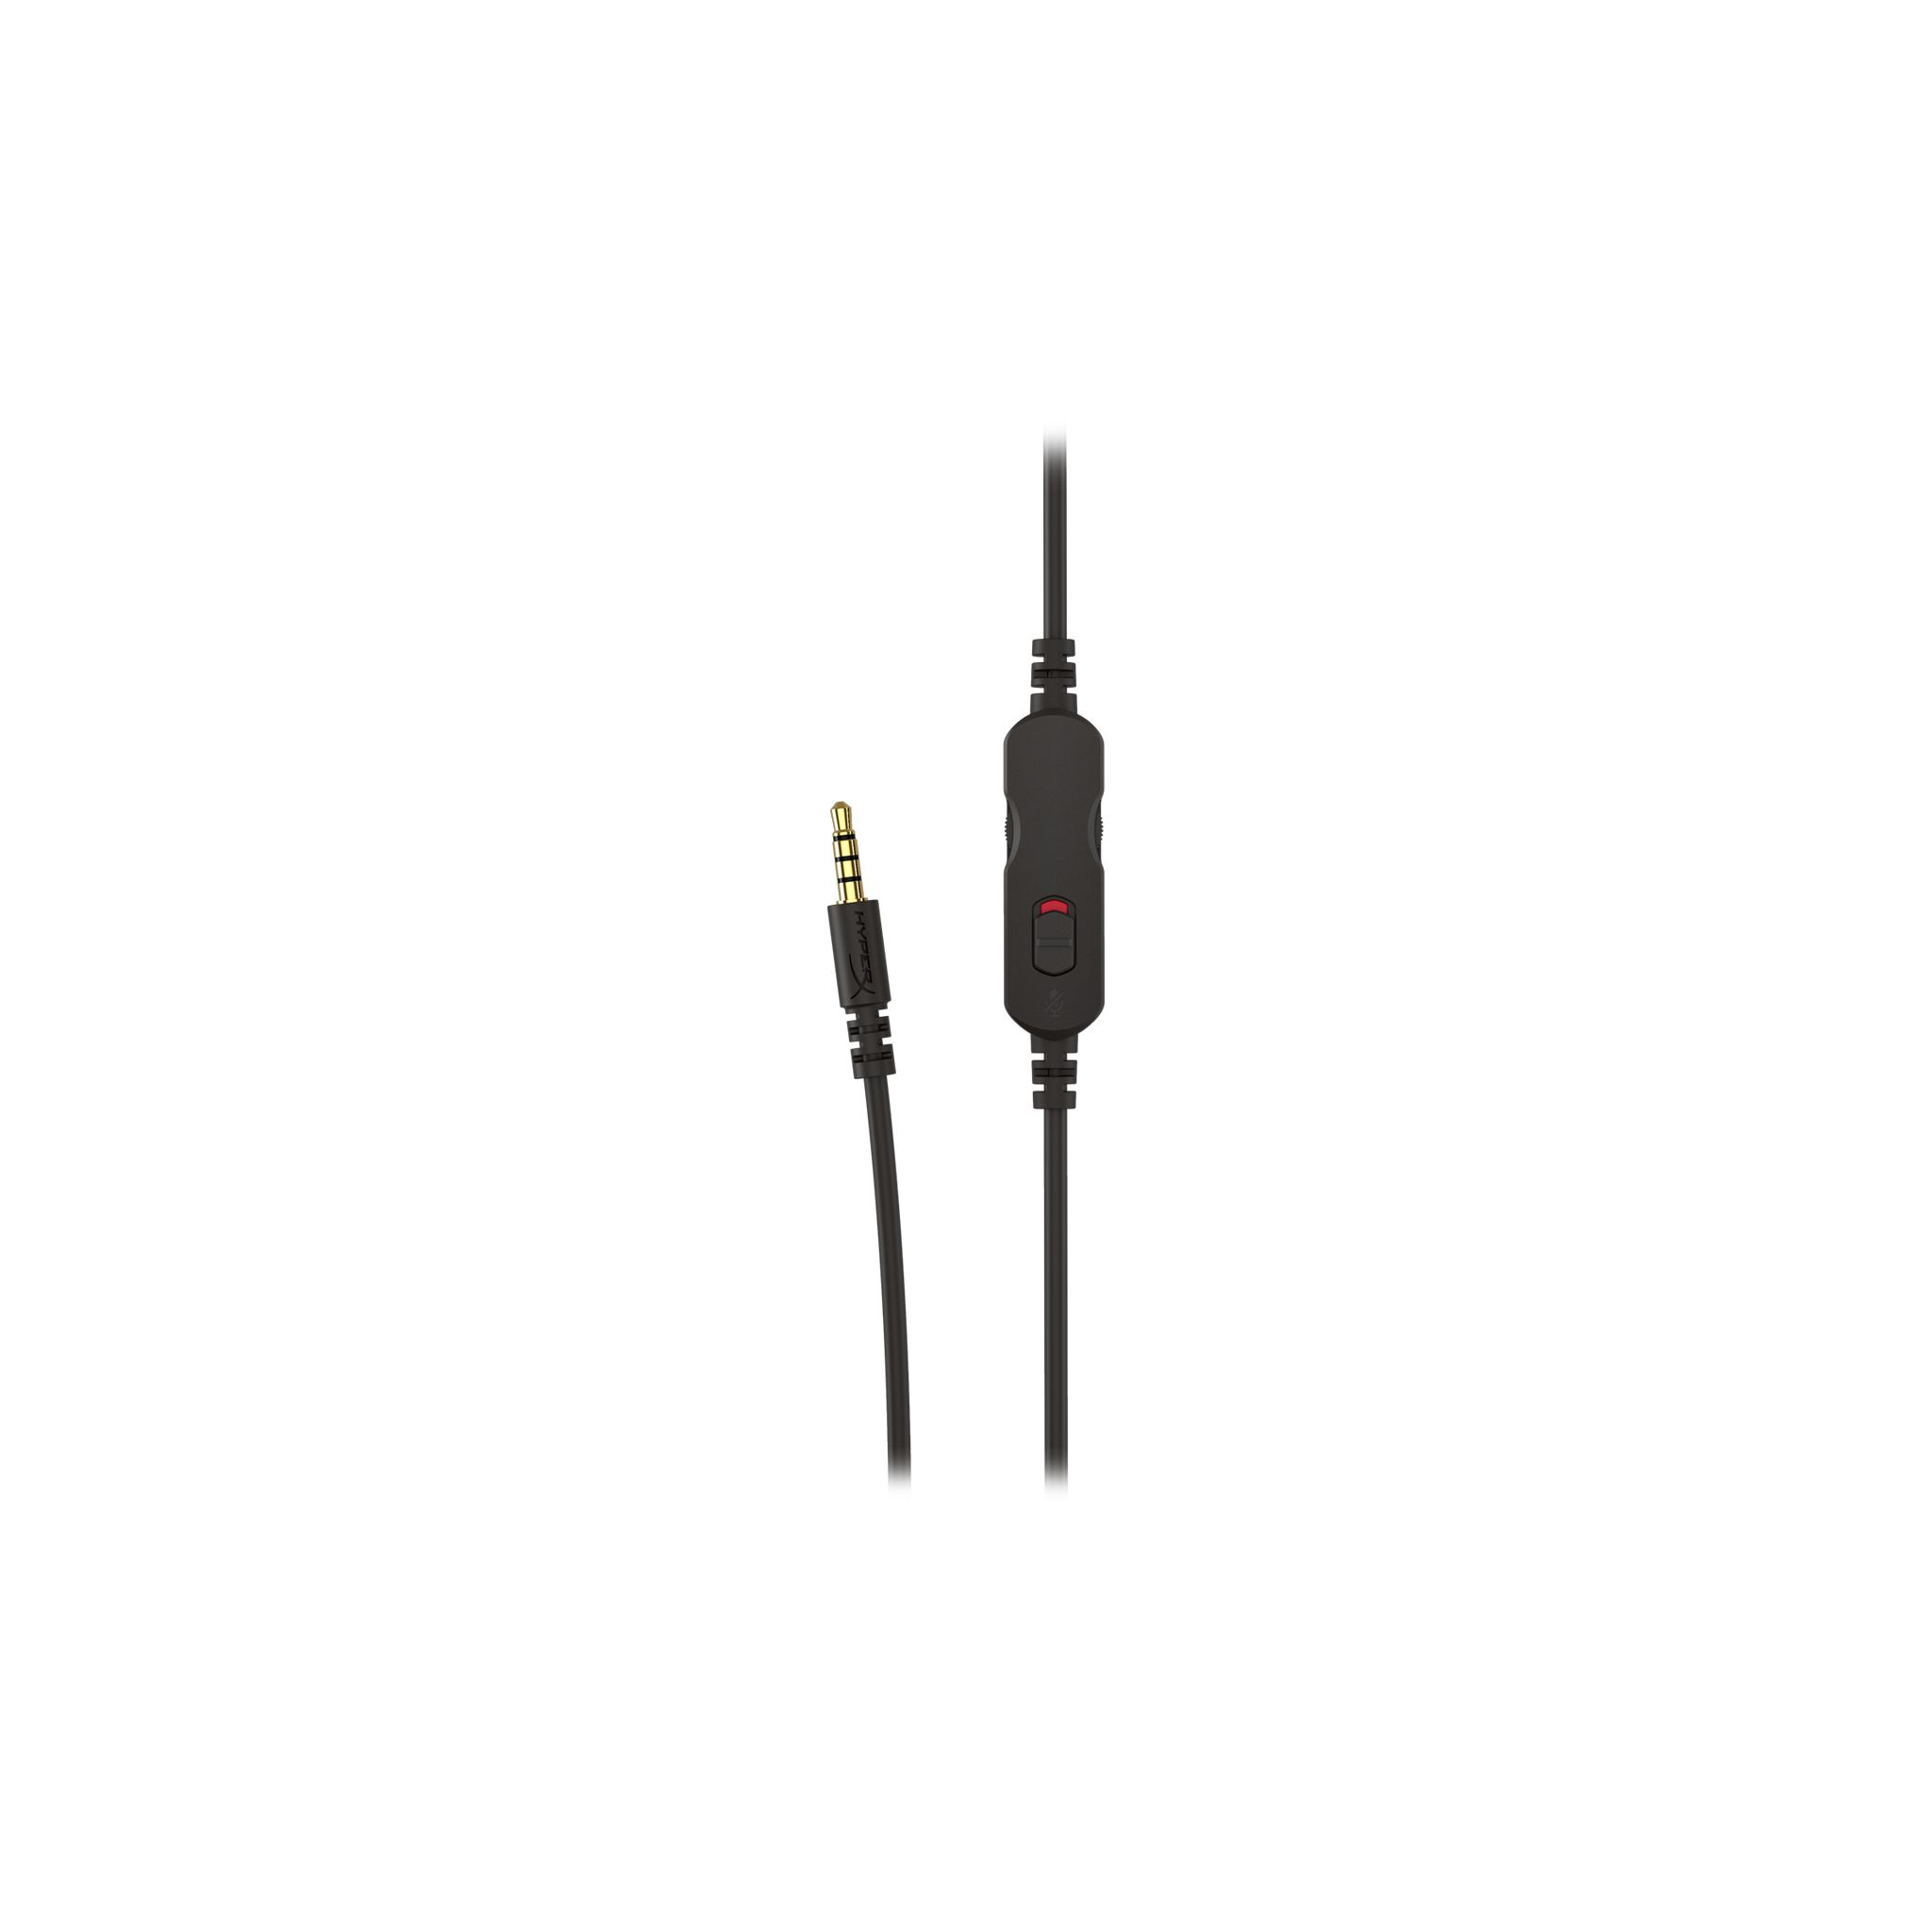 HYPERX HX-HSCCHS-BK/EM CLOUD CHAT HEADSET Over-ear Headset Schwarz PS4